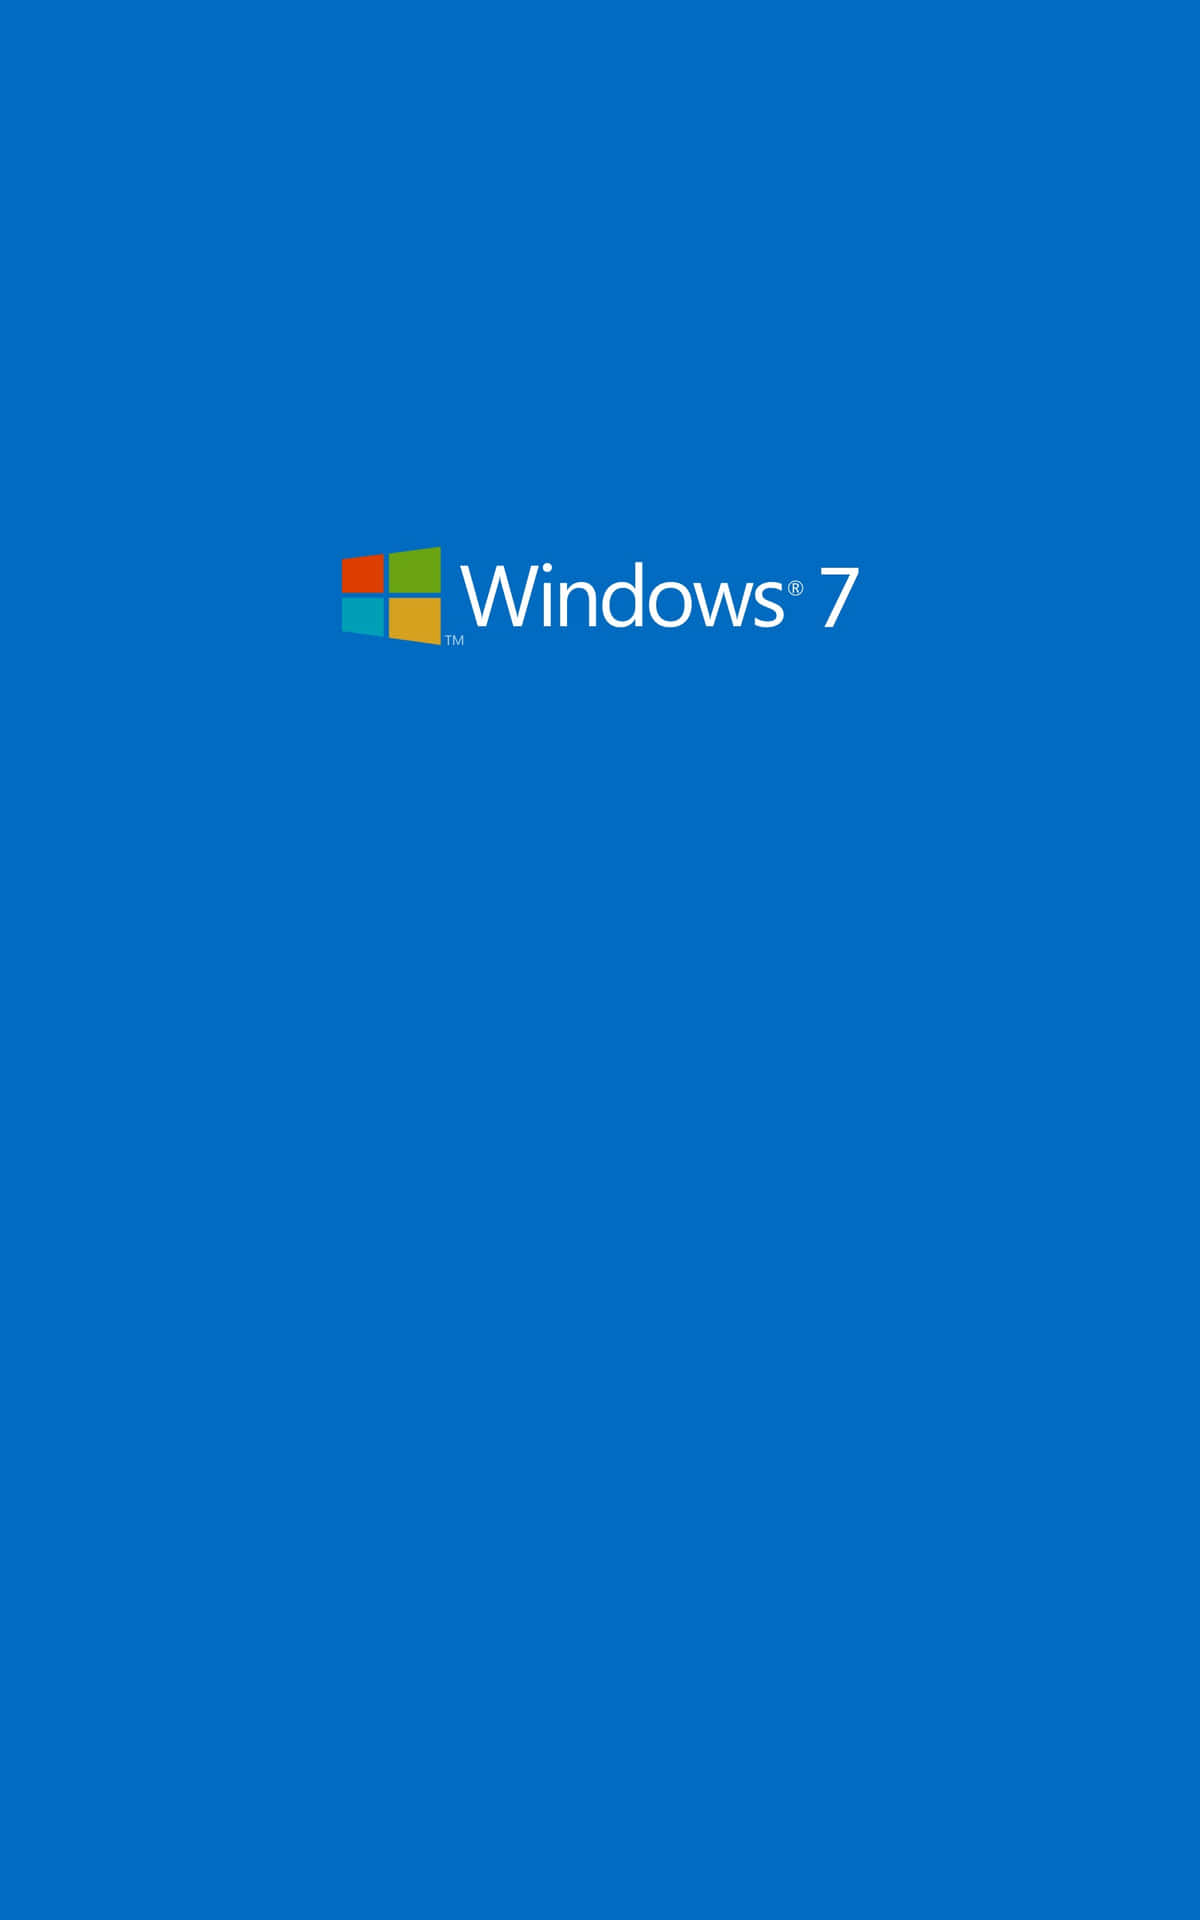 Enjoy the Splendid Features of Windows 7